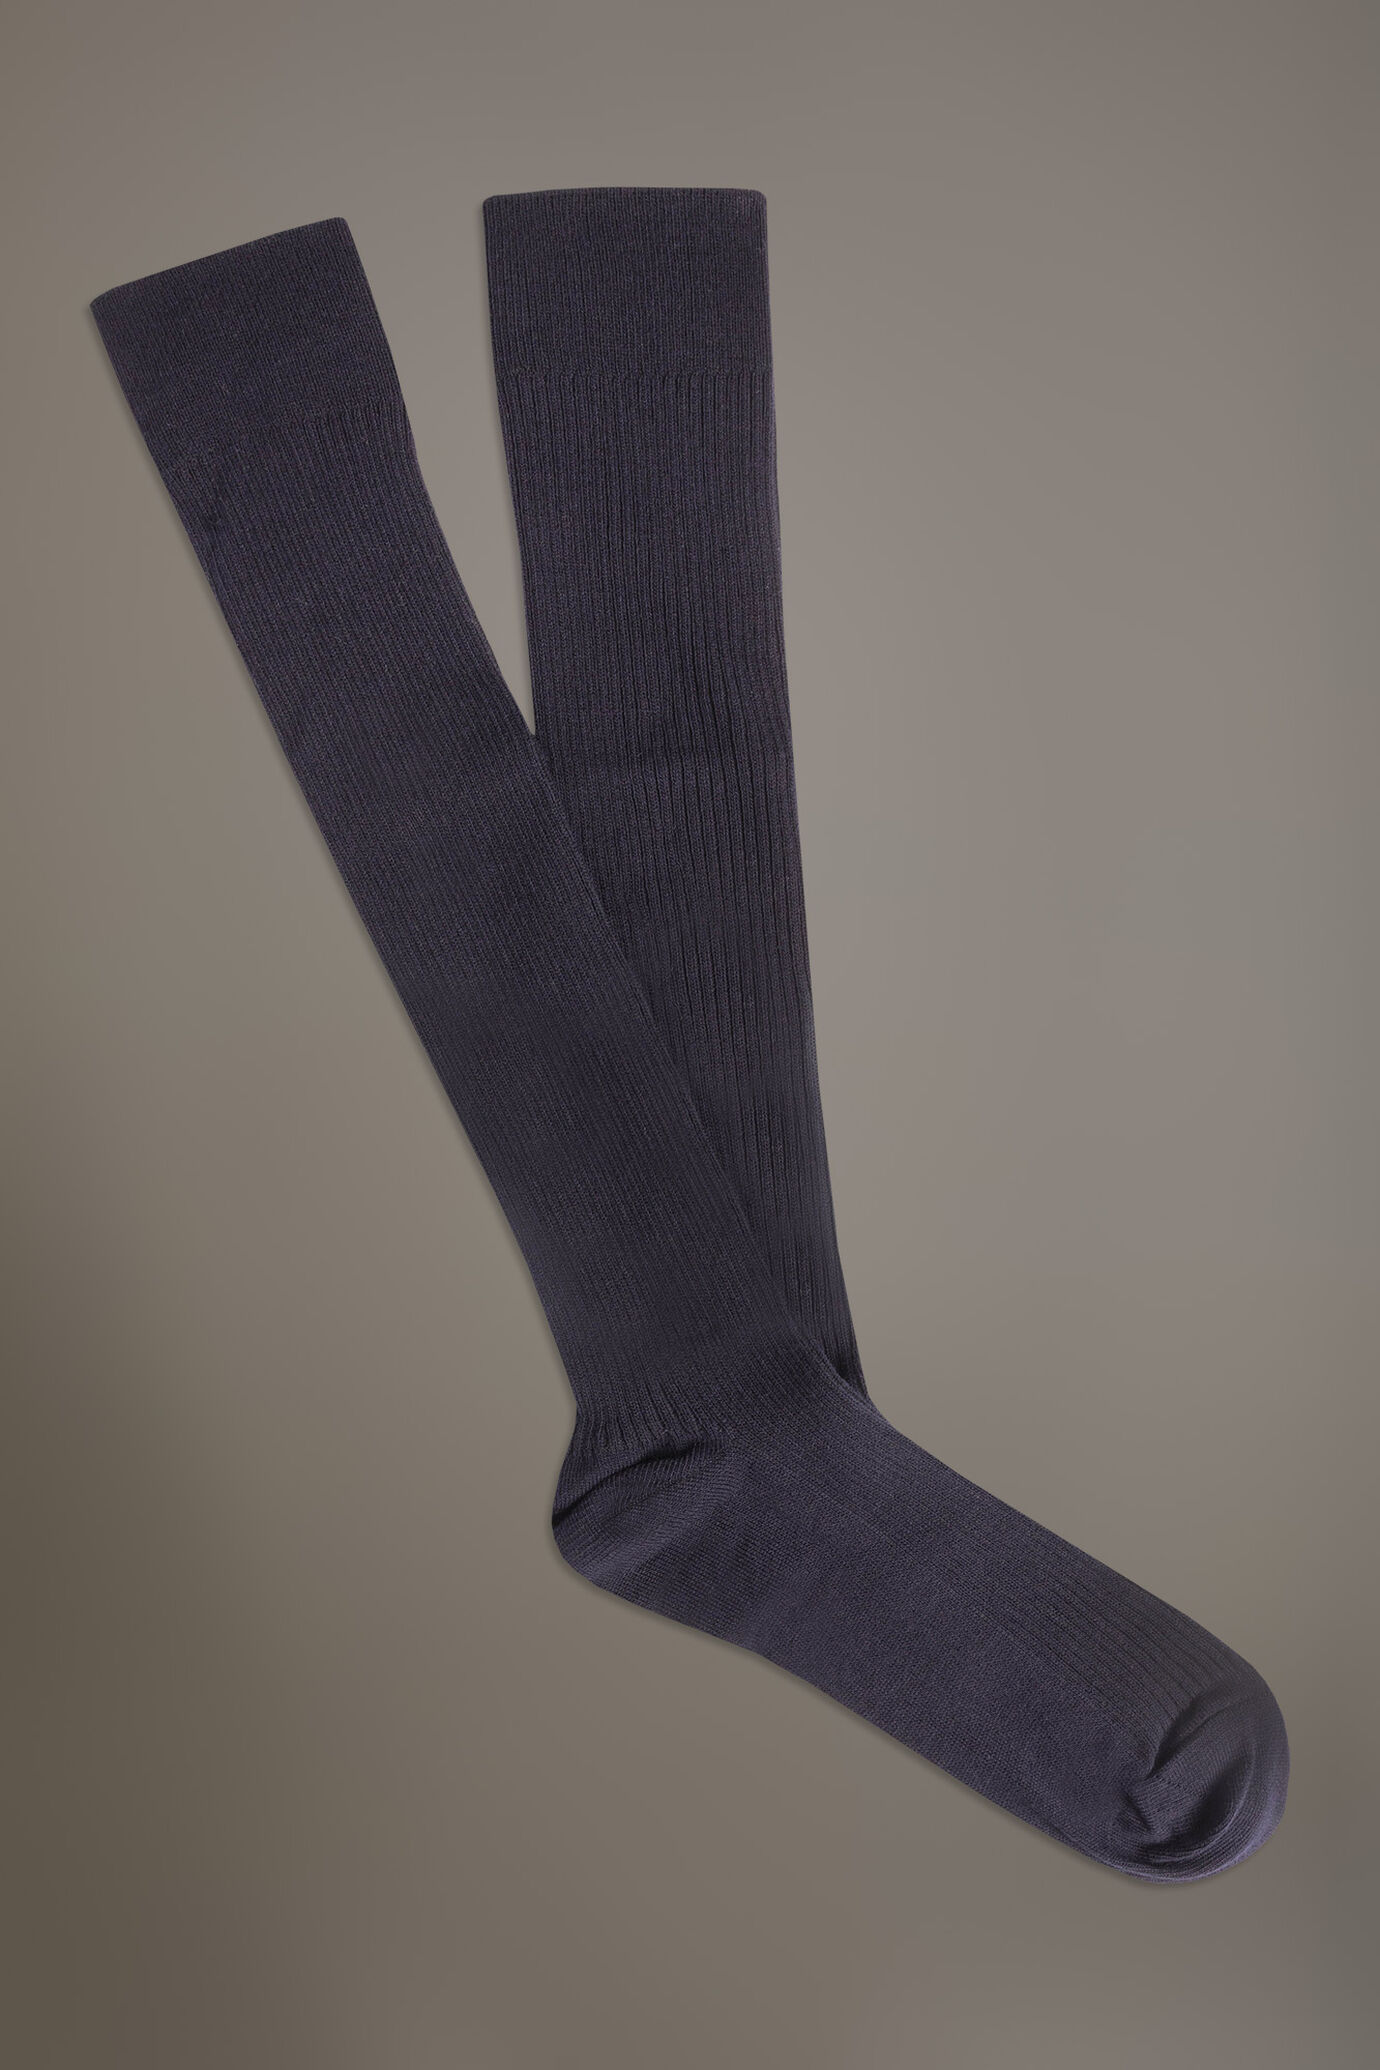 Long socks in ribbed knit made in Italy